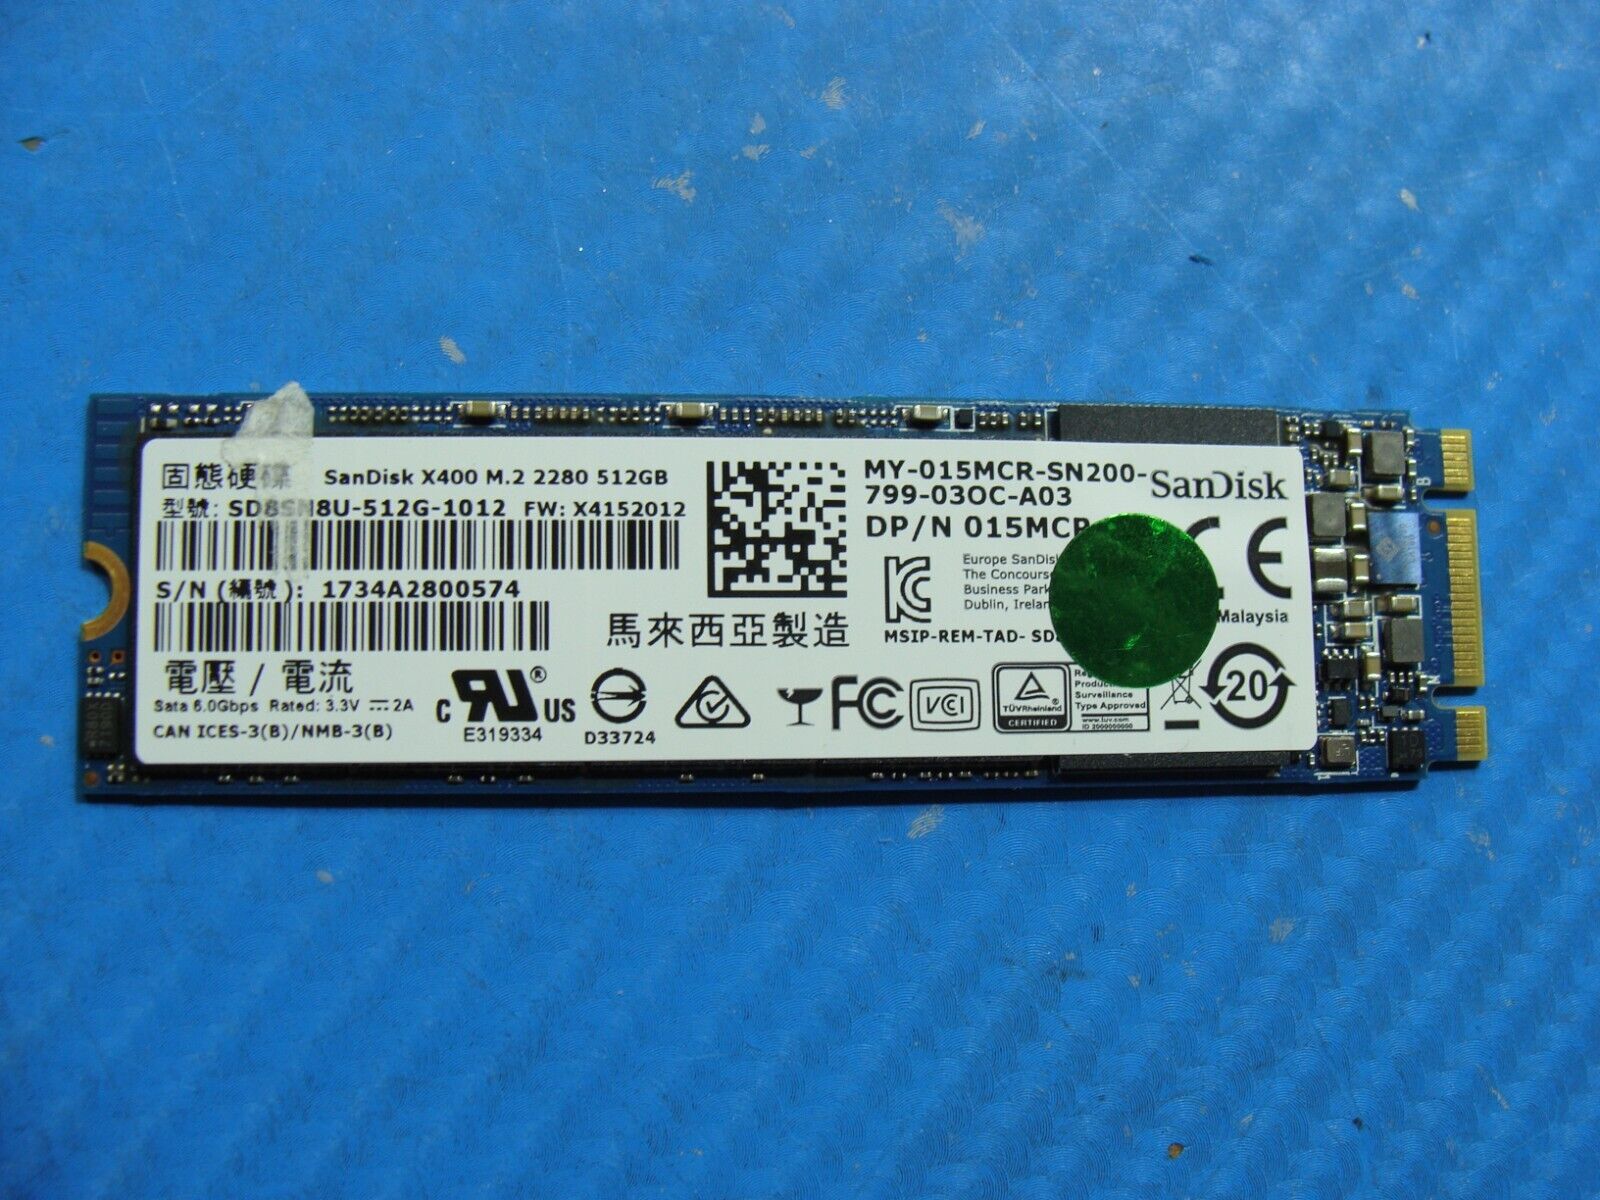 Dell 7480 SanDisk 512GB SATA M.2 SSD Solid State Drive SD8SN8U-512G-1012 15MCR